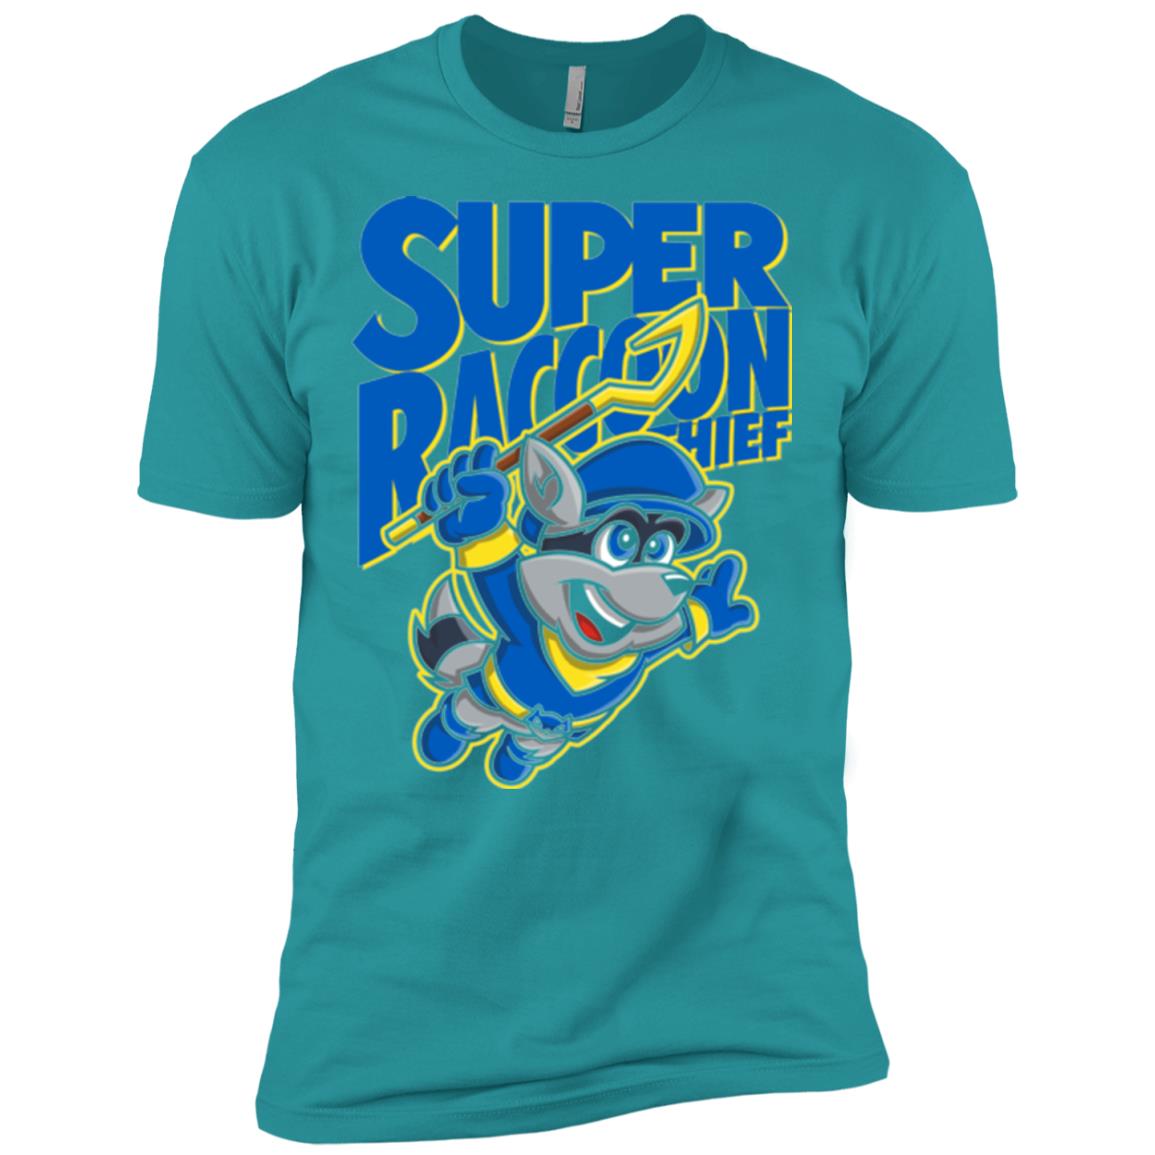 Super Racoon Thief Men's Premium T-Shirt